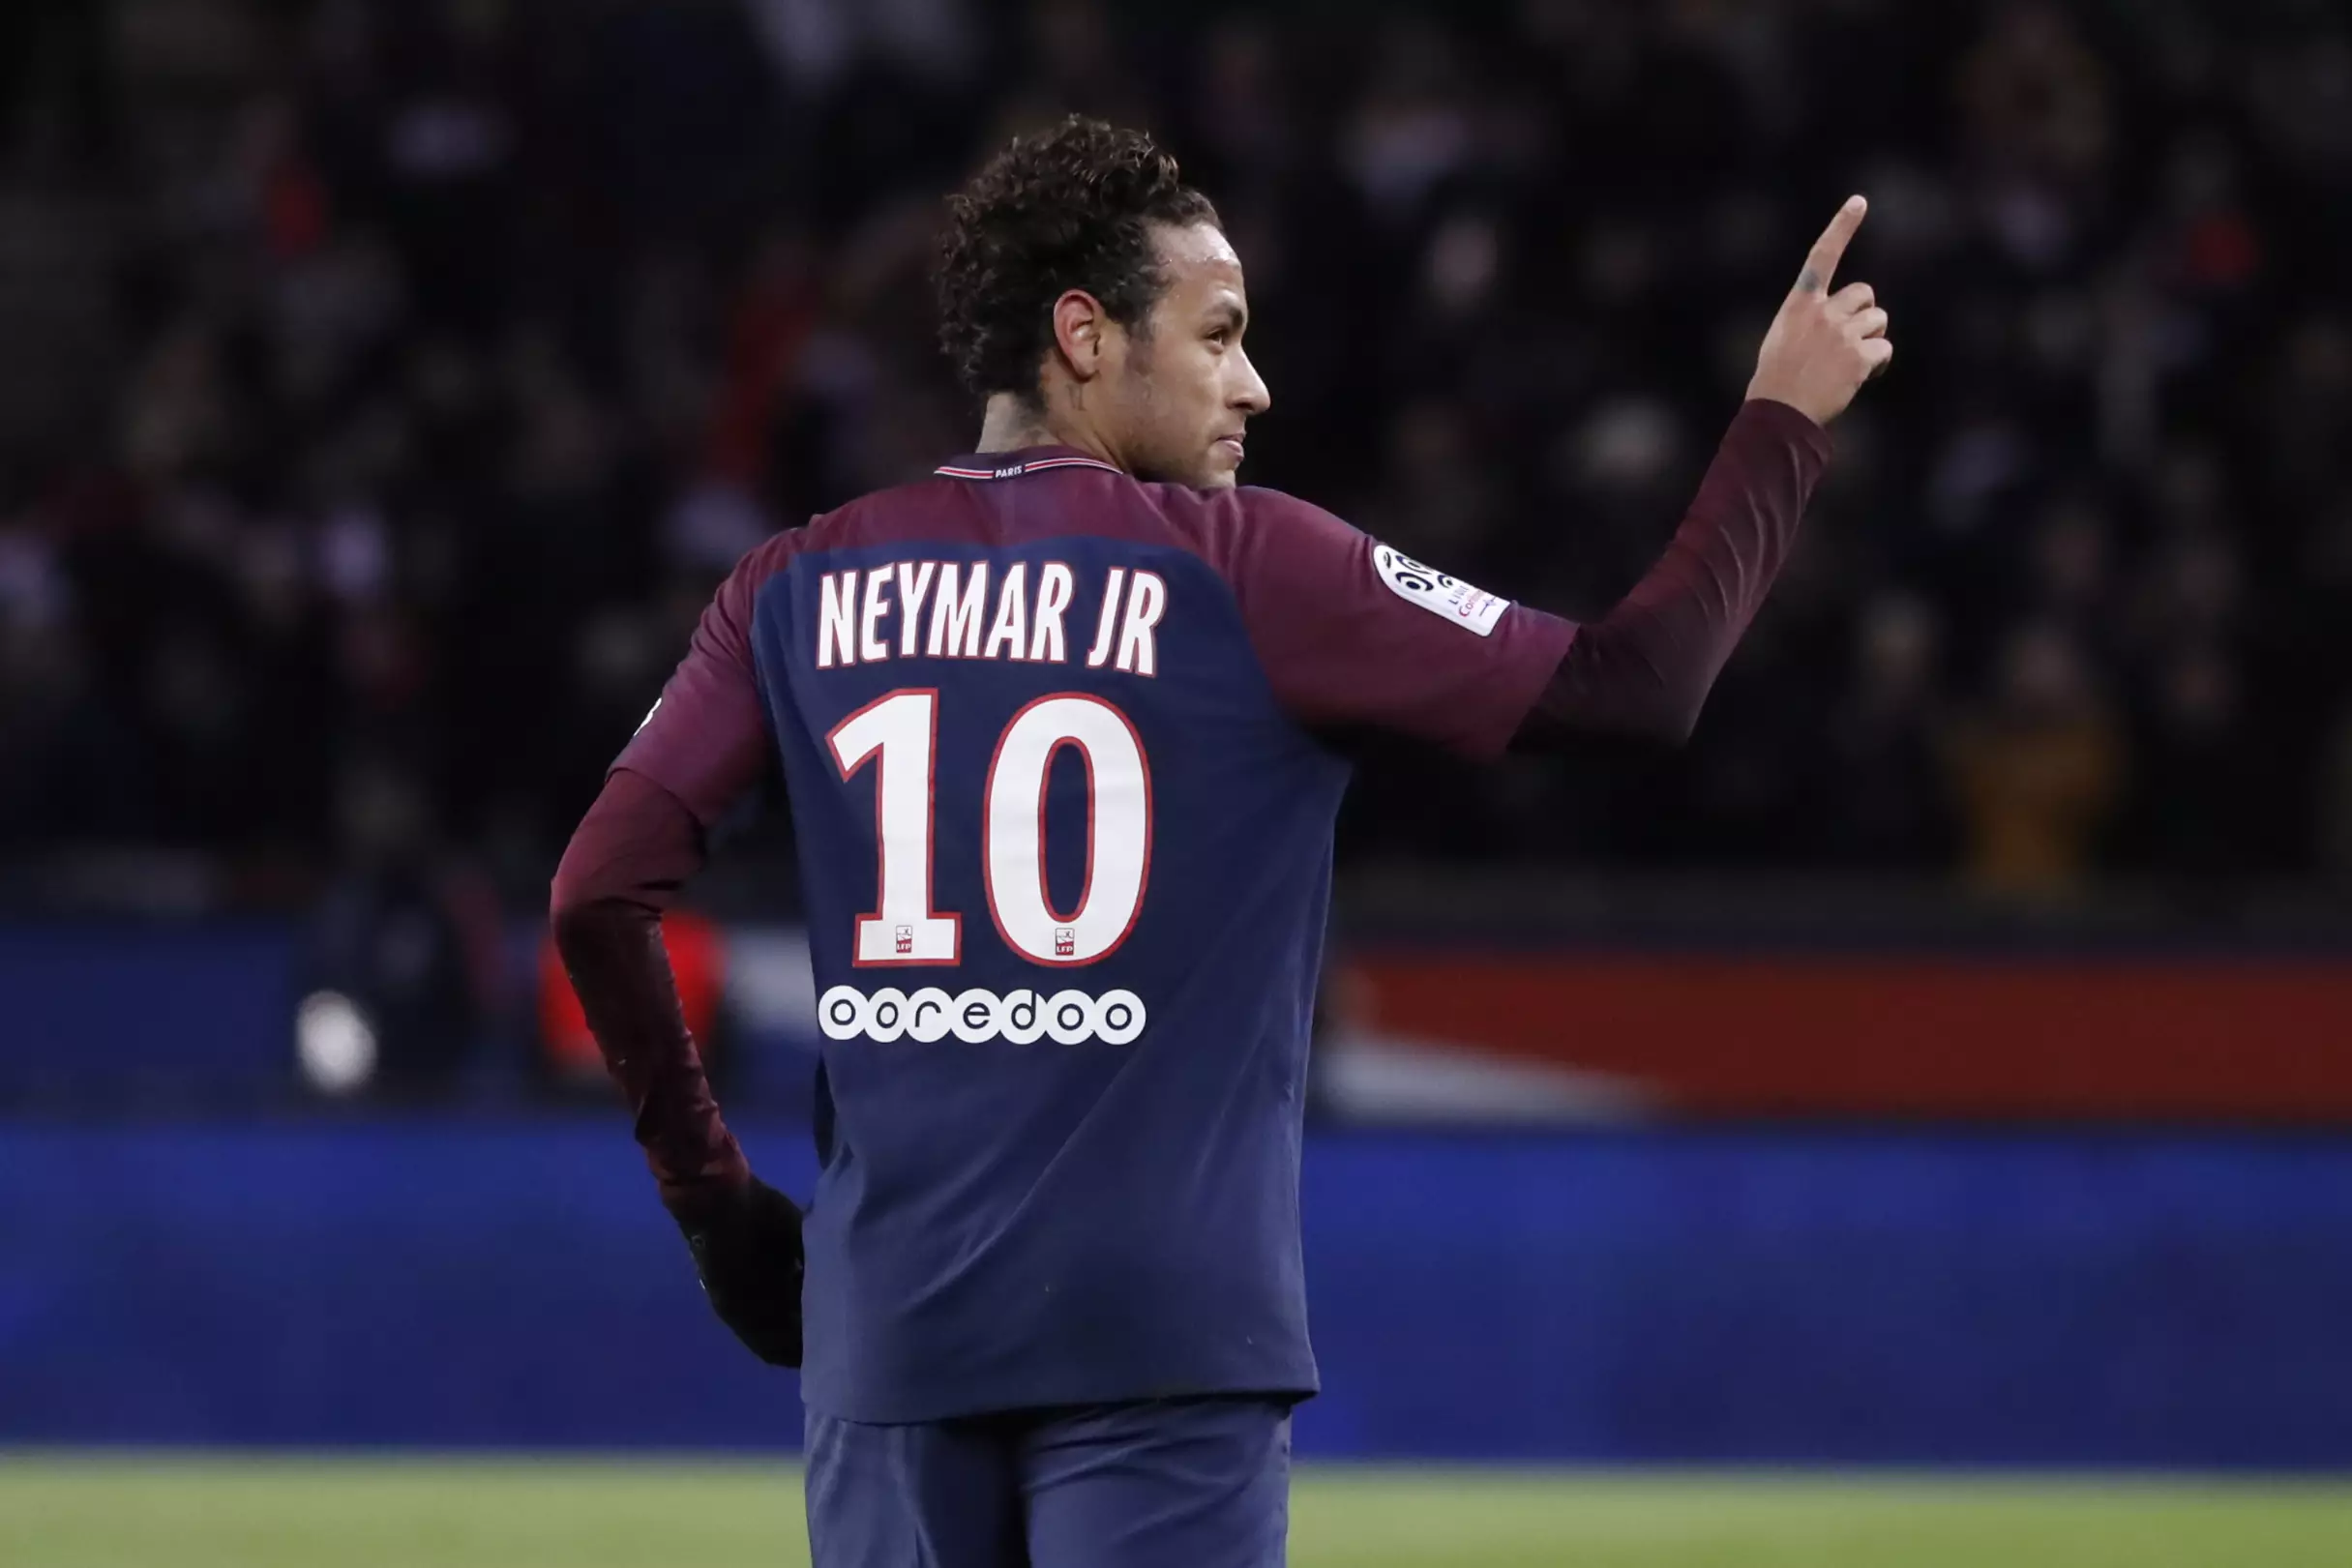 Neymar celebrates scoring a goal for PSG. Image: PA